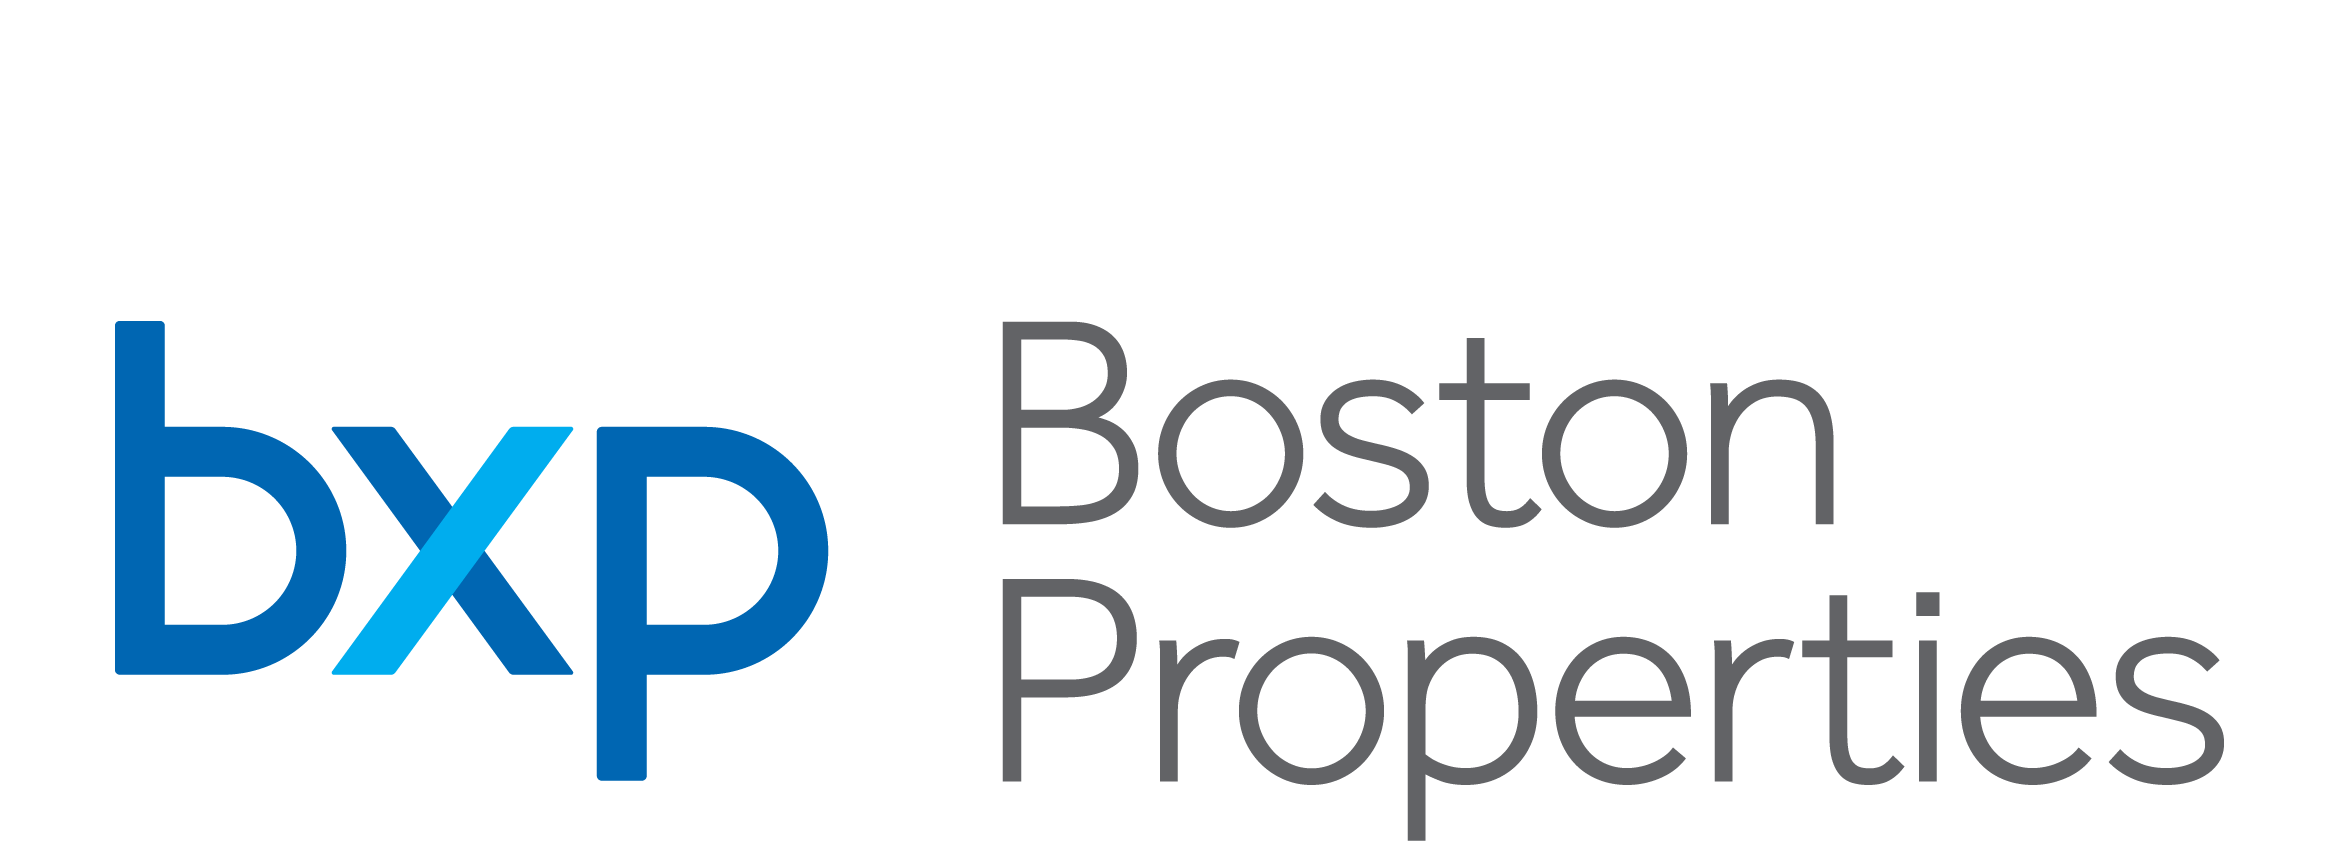 19_Boston Properties.png